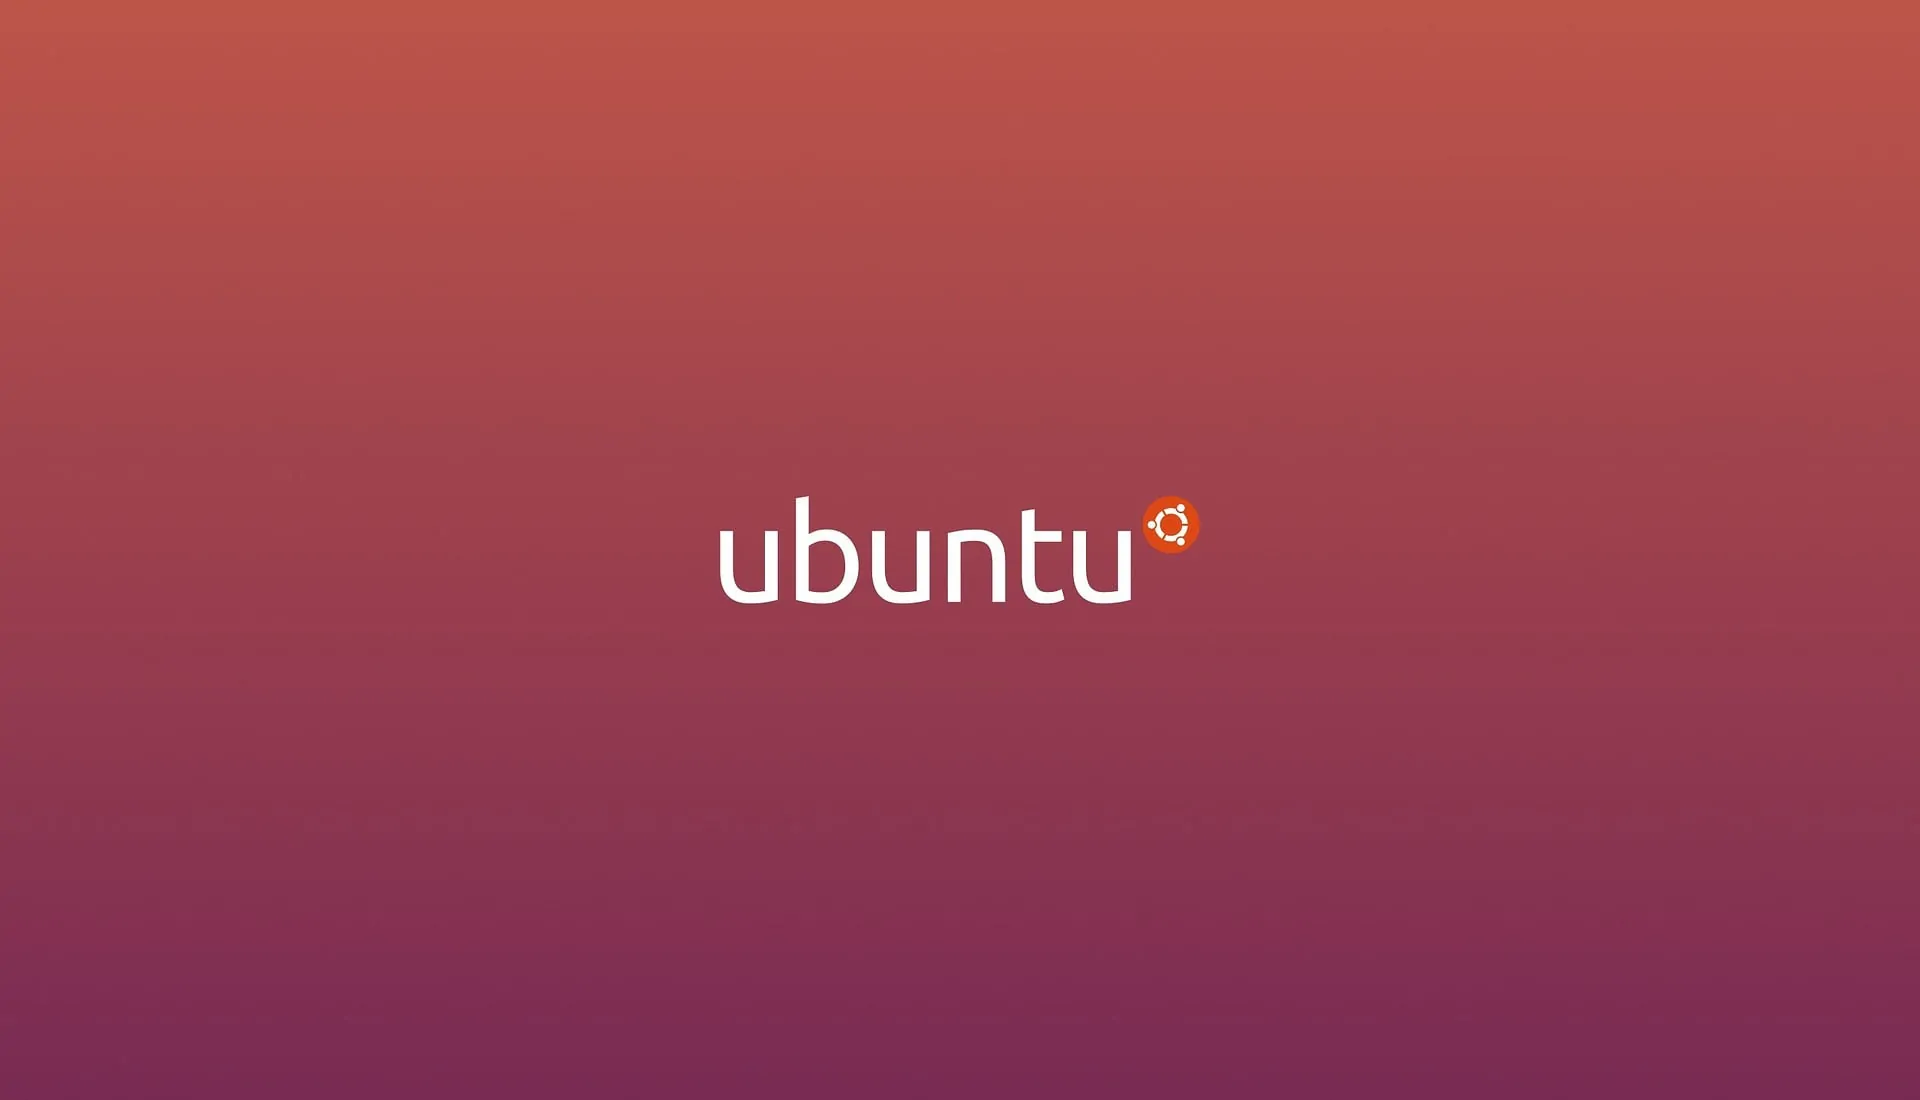 Come provare Ubuntu senza installarlo